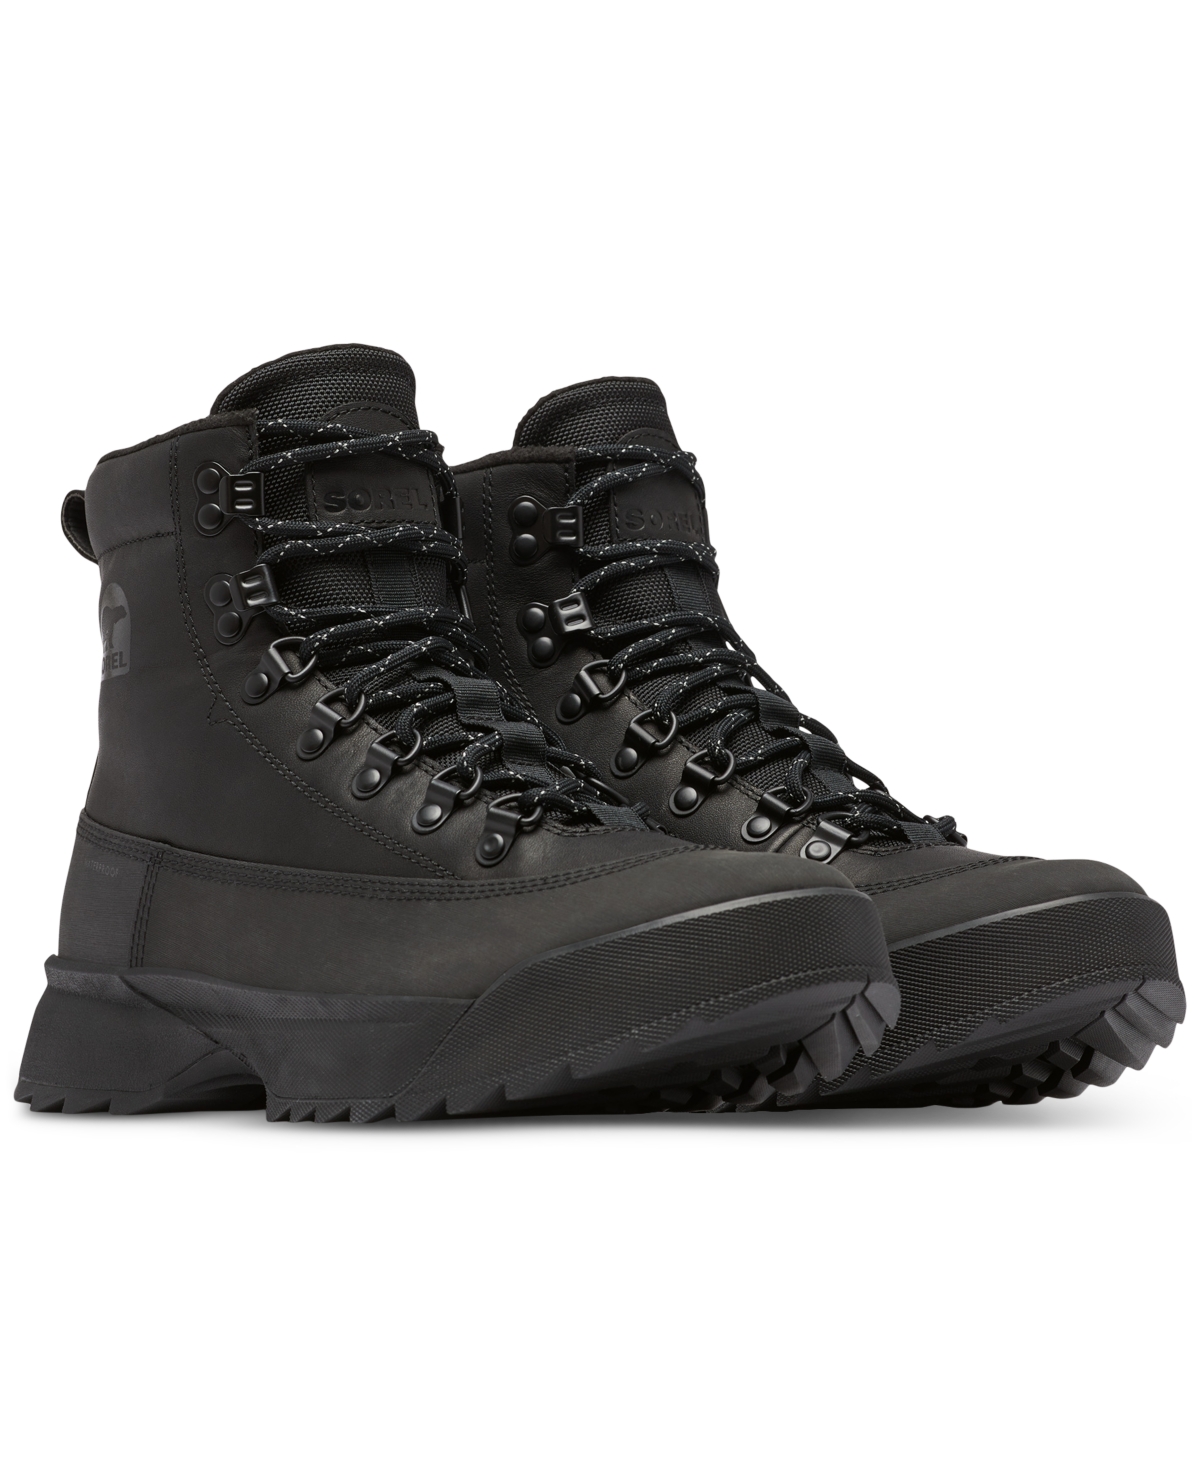 Men's Scout Pro Waterproof Boots - Black, Black